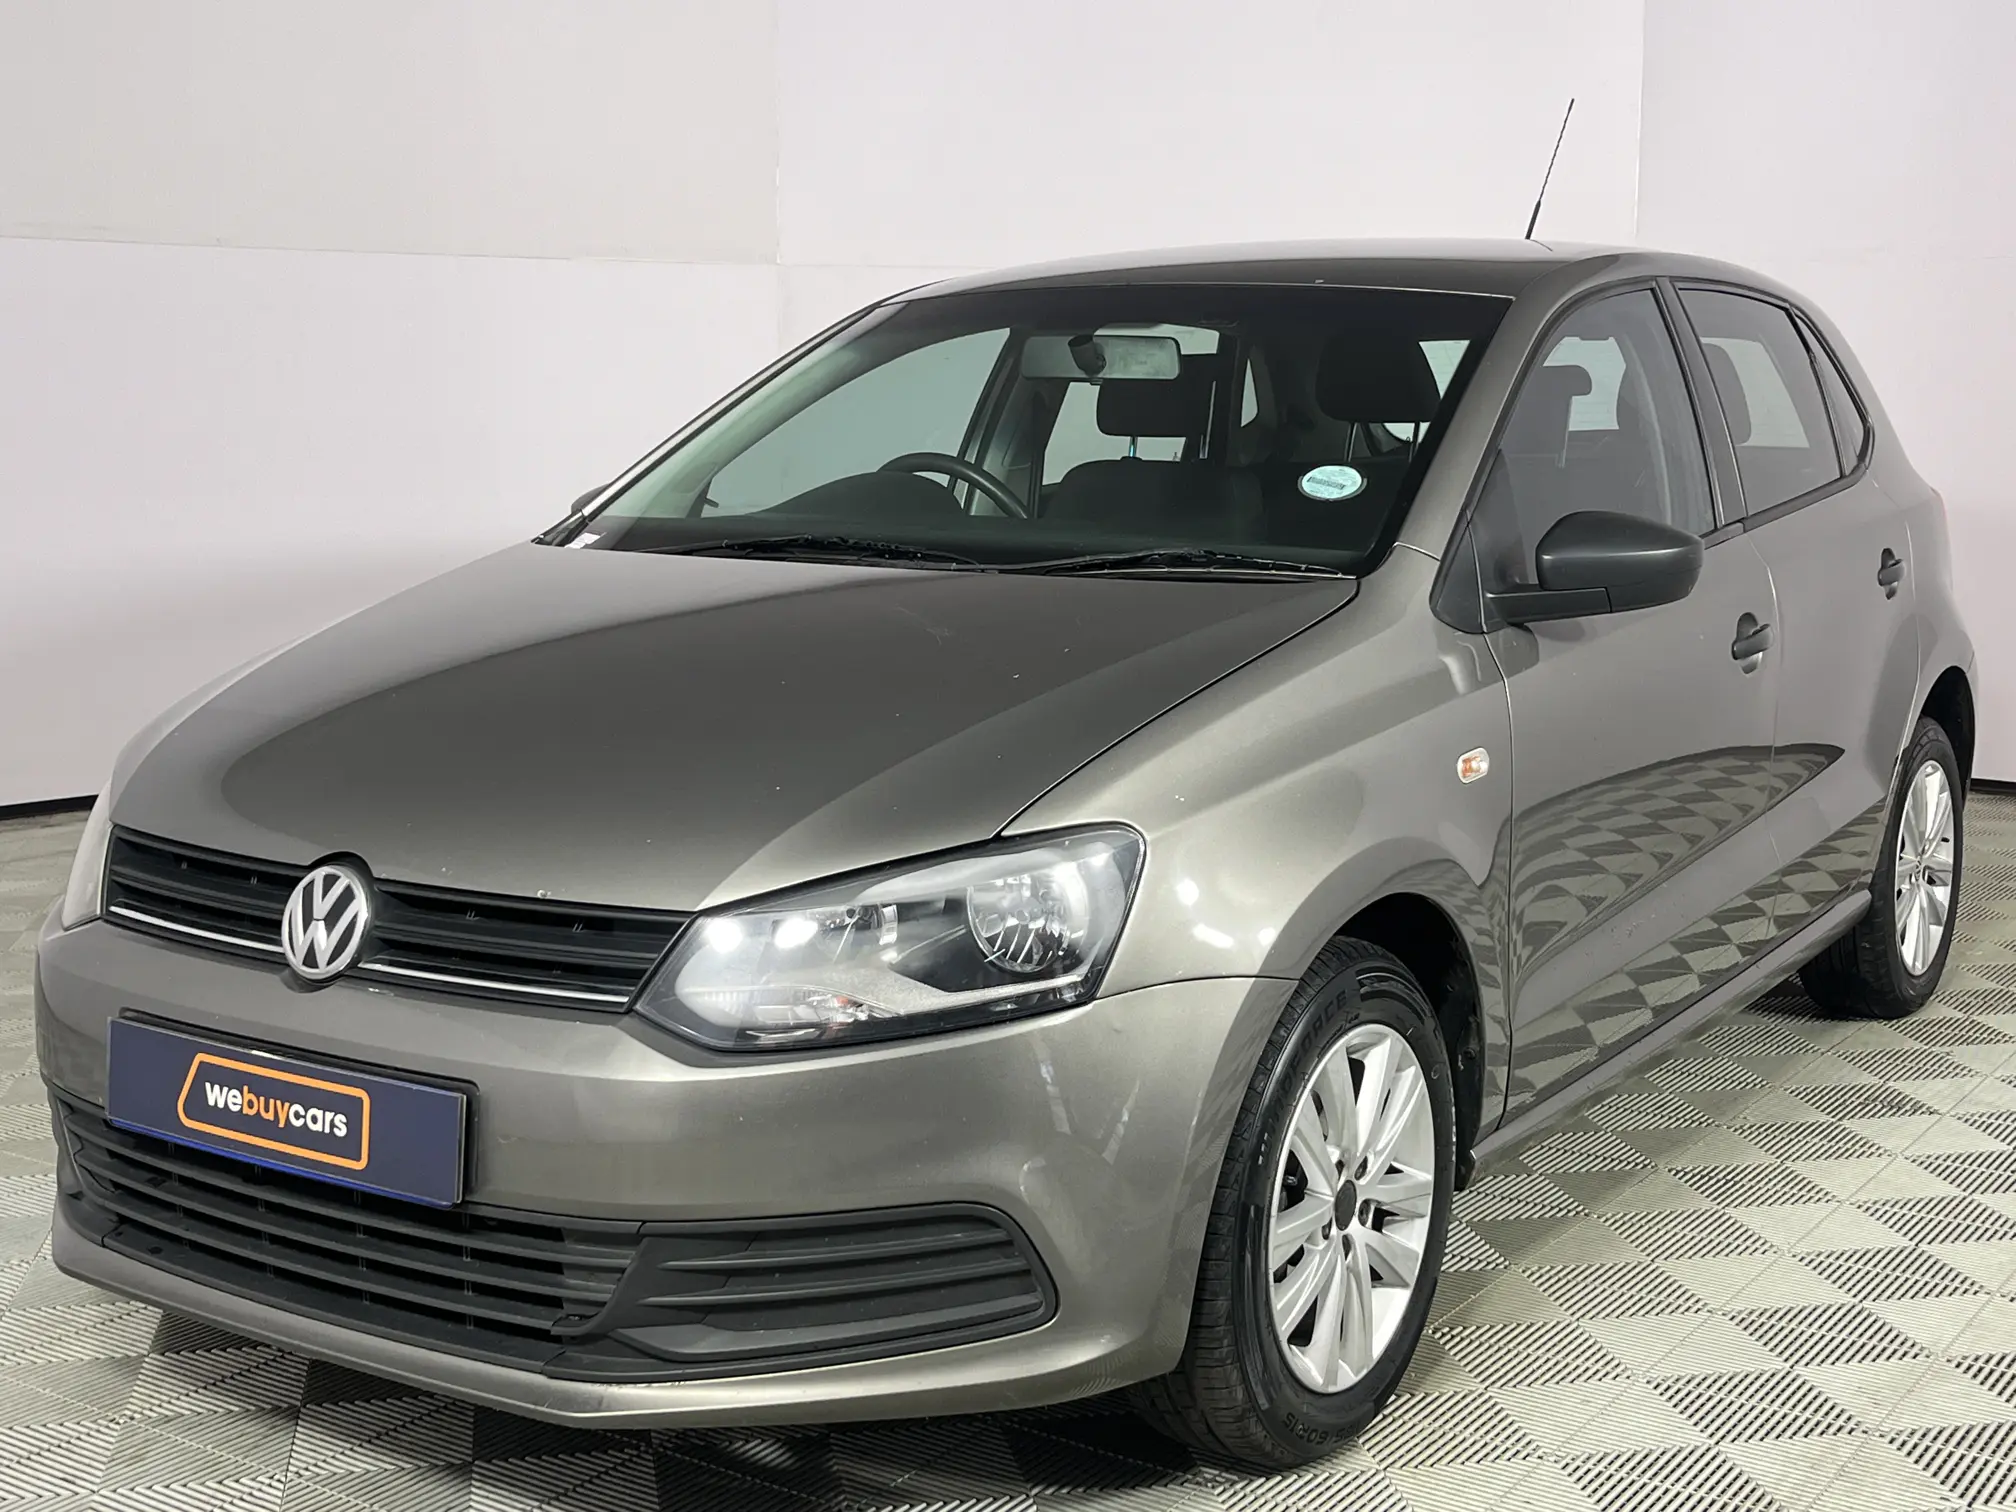 2018 Volkswagen Polo Vivo 1.4 Trendline (5dr)